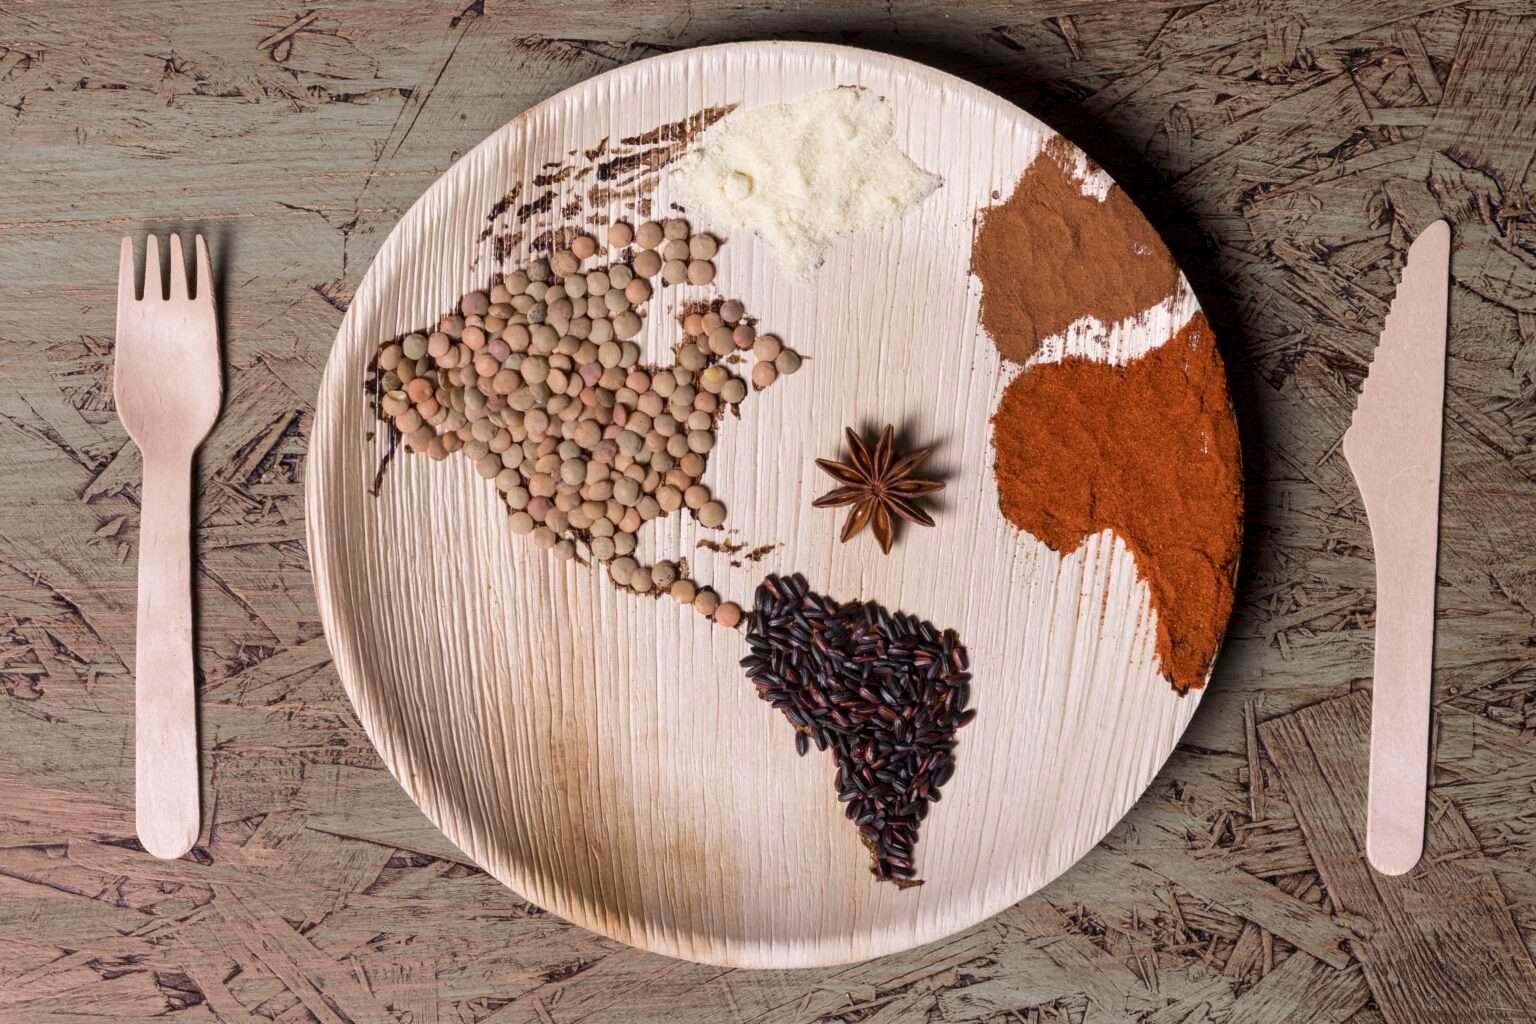 global cuisine exploration